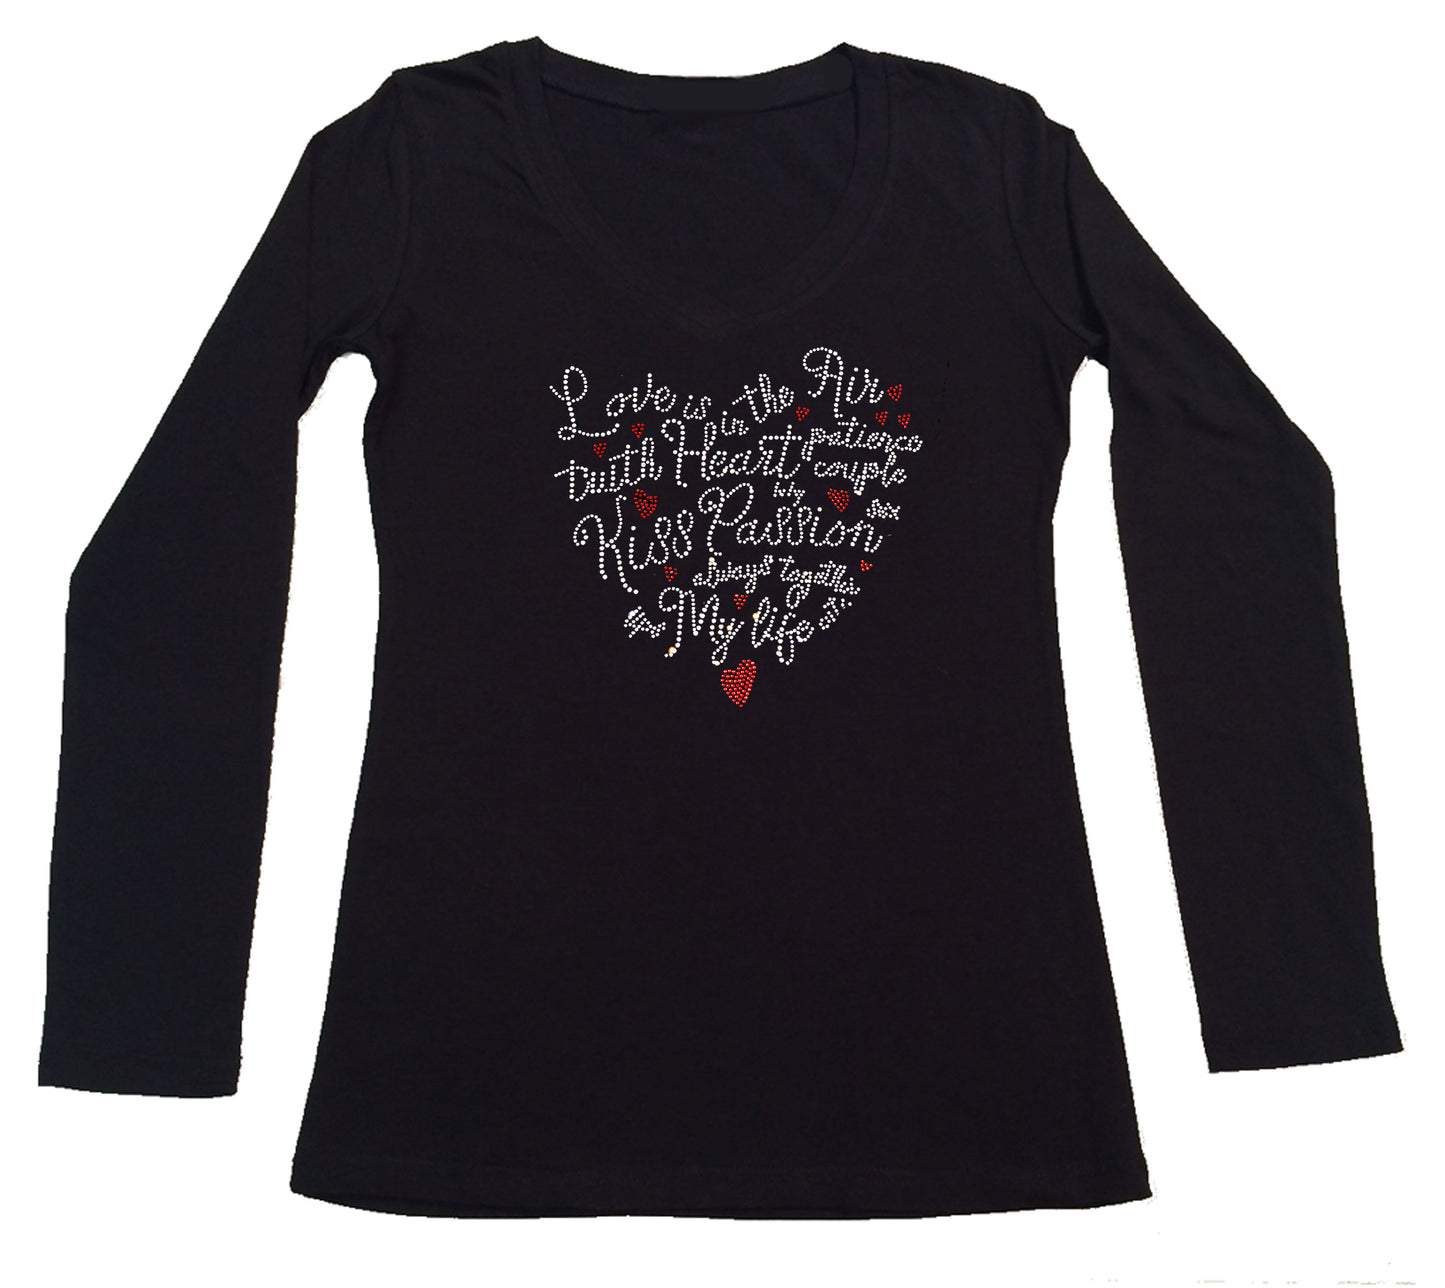 Womens T-shirt with Love Saying Heart in Rhinestones